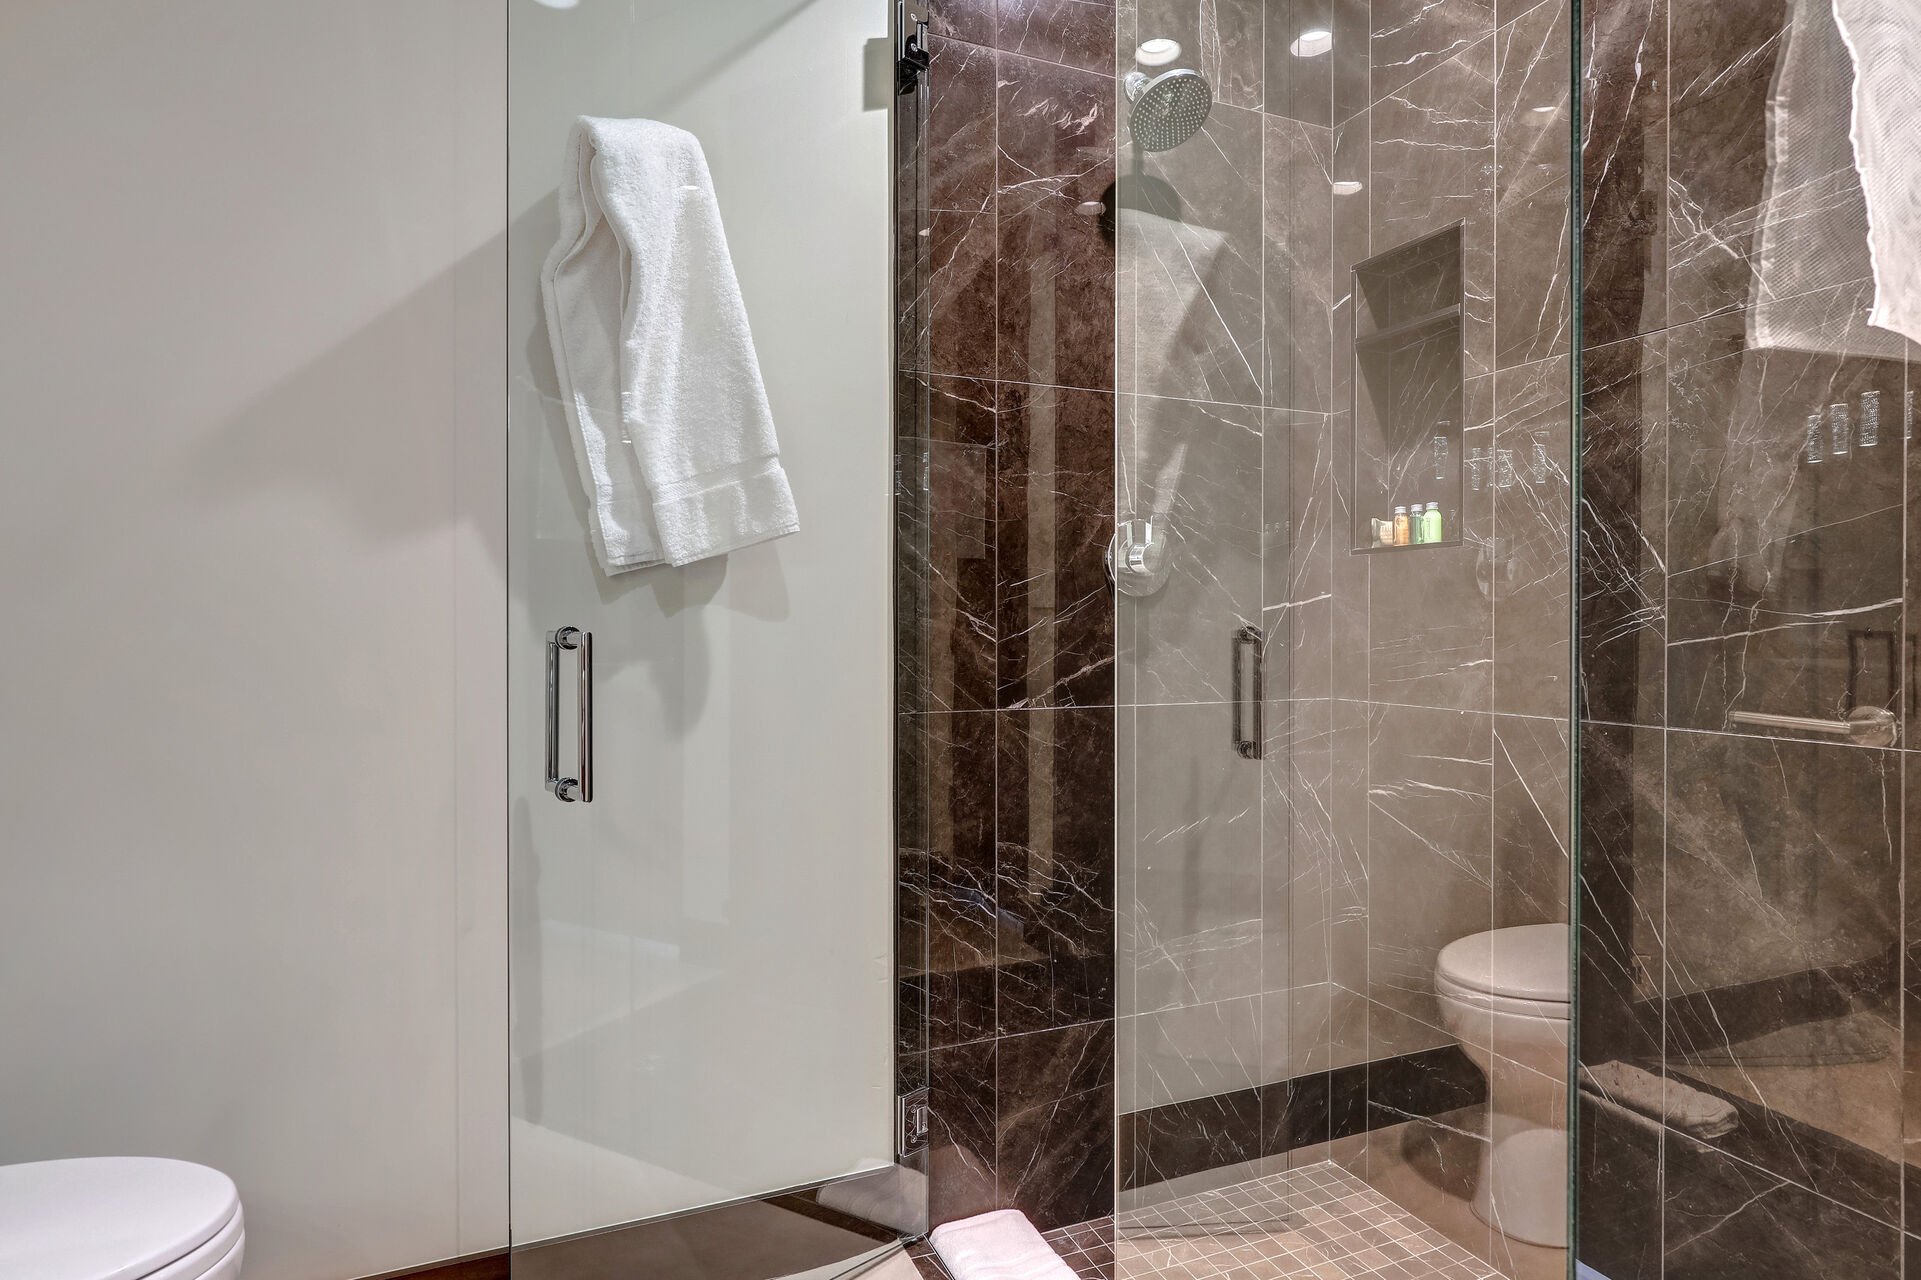 Bedroom 3 Bathroom with tiled shower